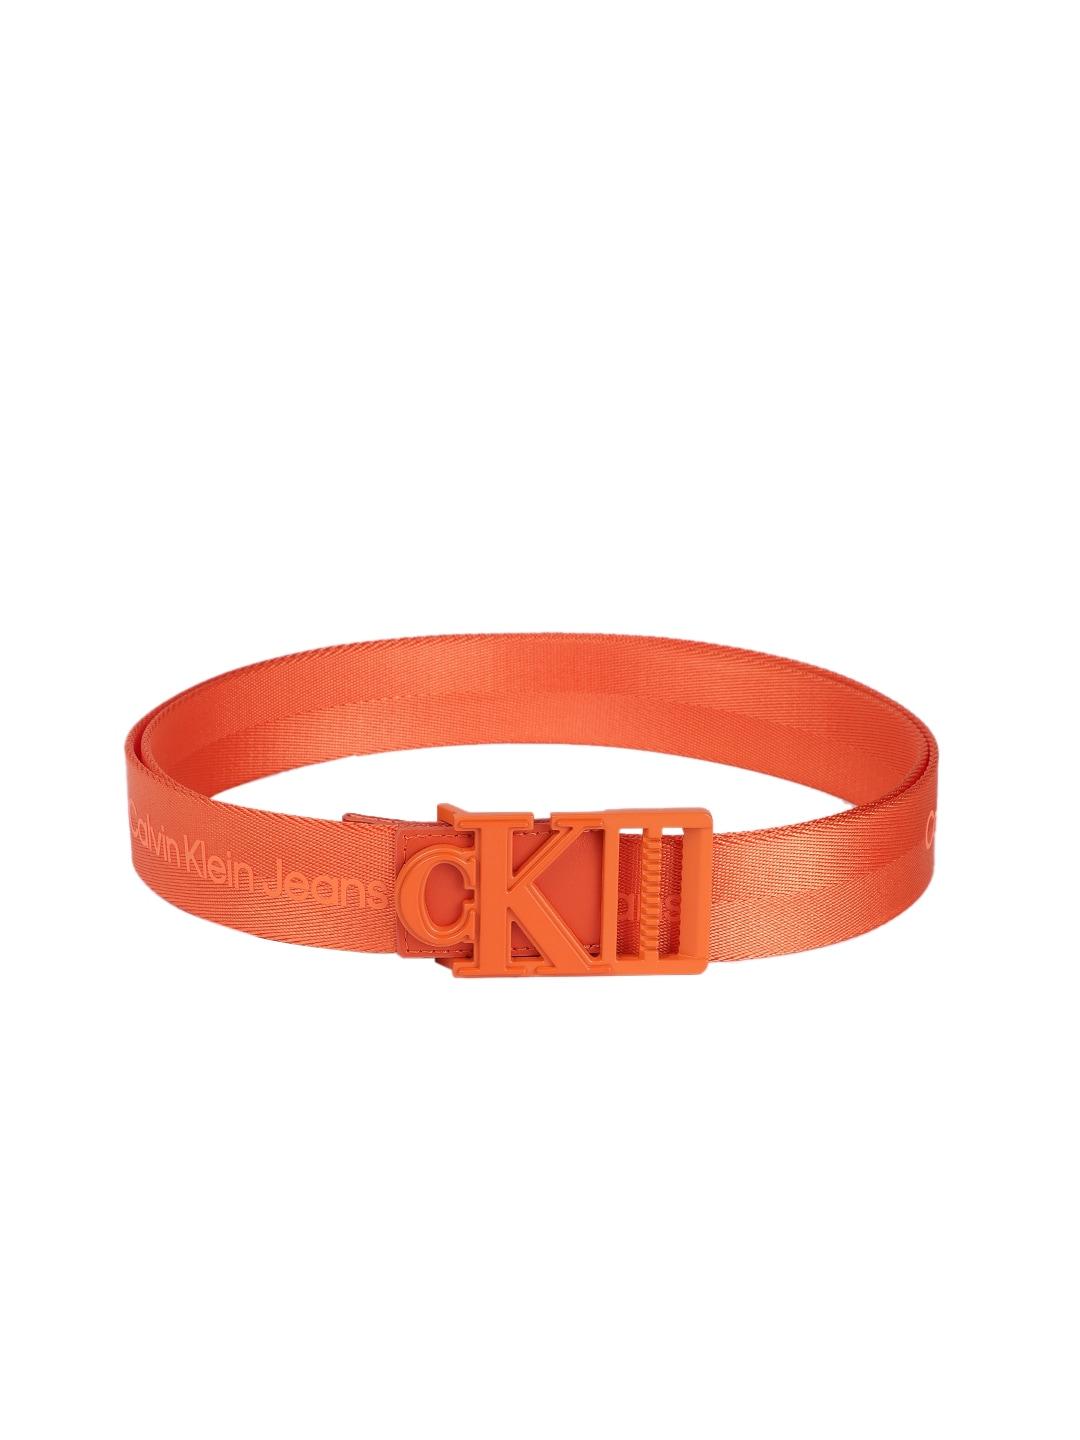 calvin-klein-men-brand-logo-printed-belt